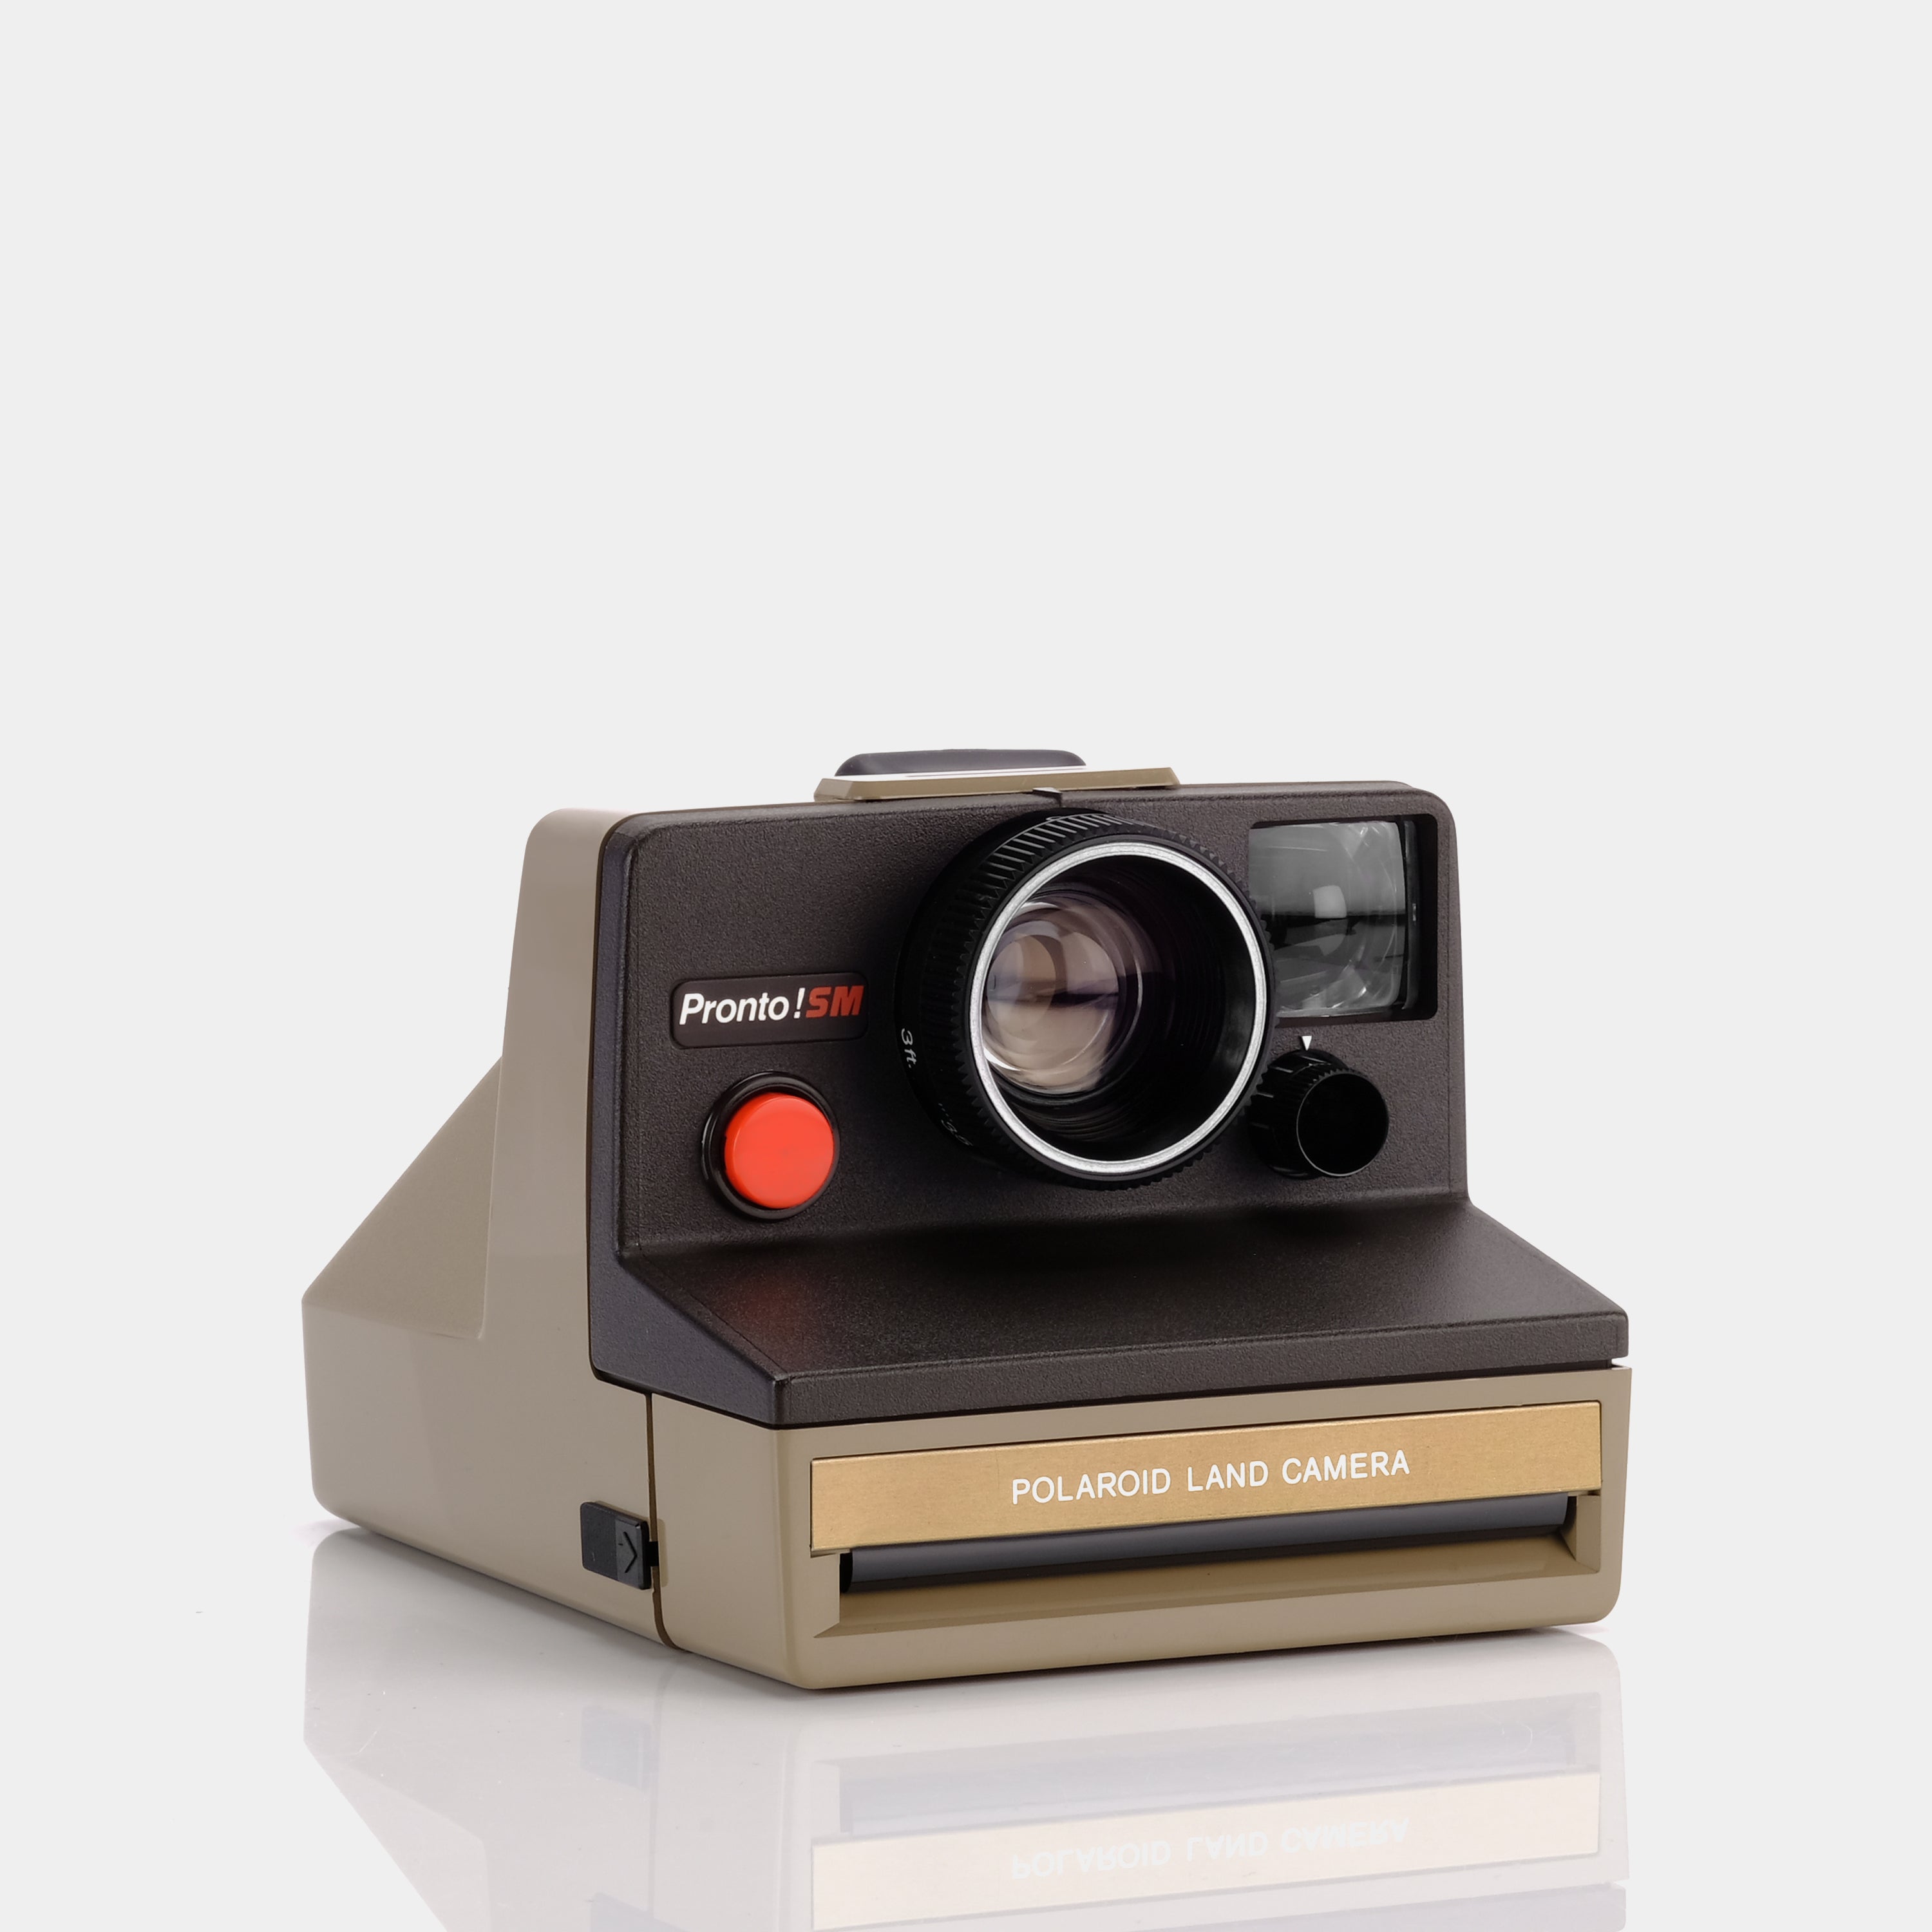 Polaroid SX-70 Pronto! SM Tan Instant Film Camera